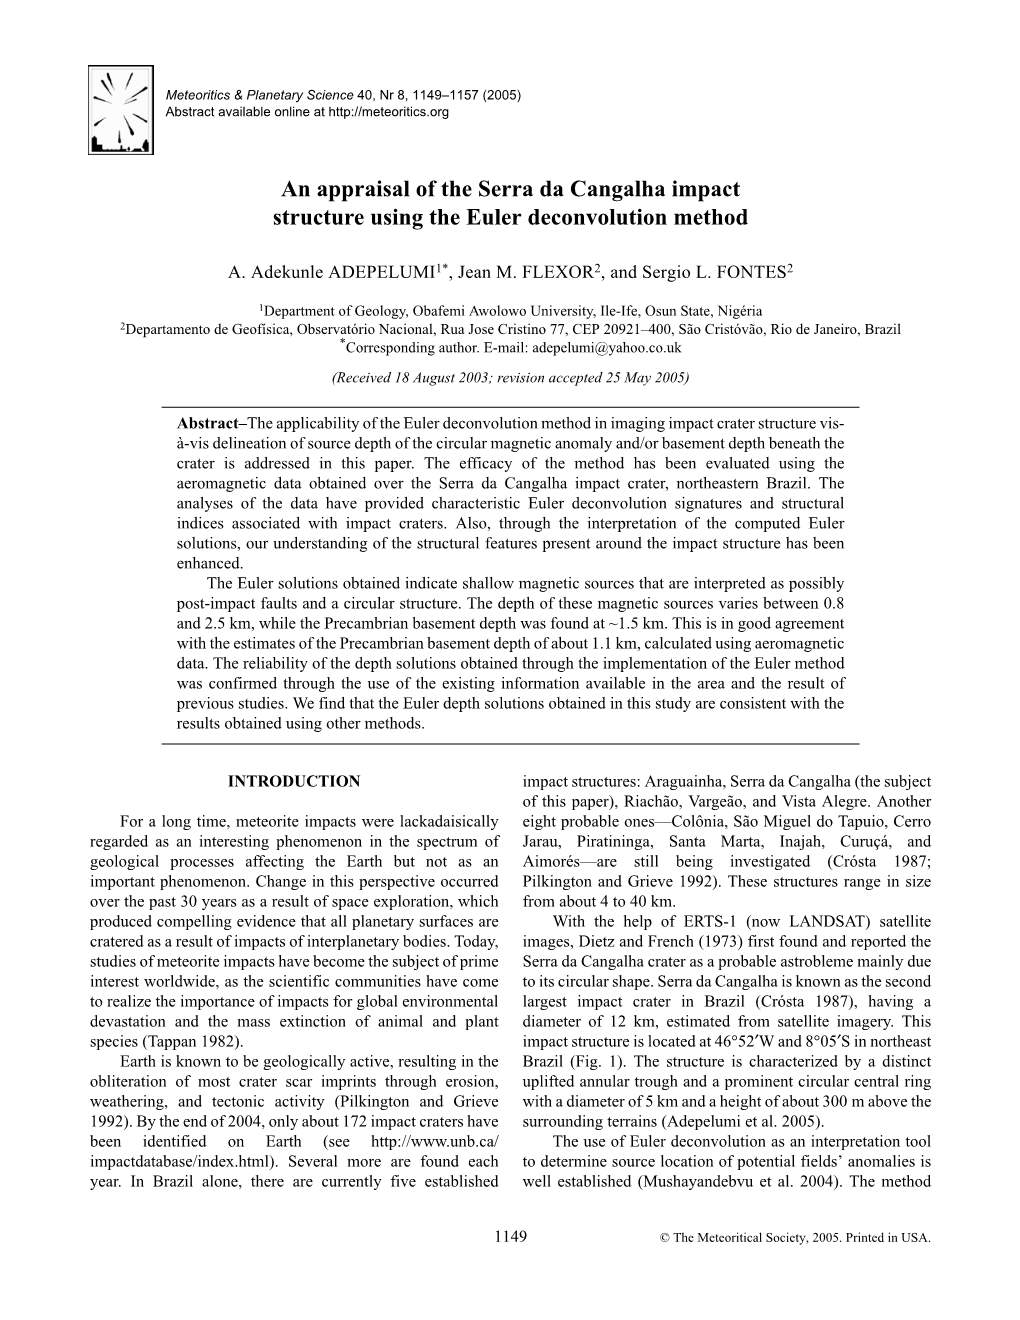 An Appraisal of the Serra Da Cangalha Impact Structure Using the Euler Deconvolution Method